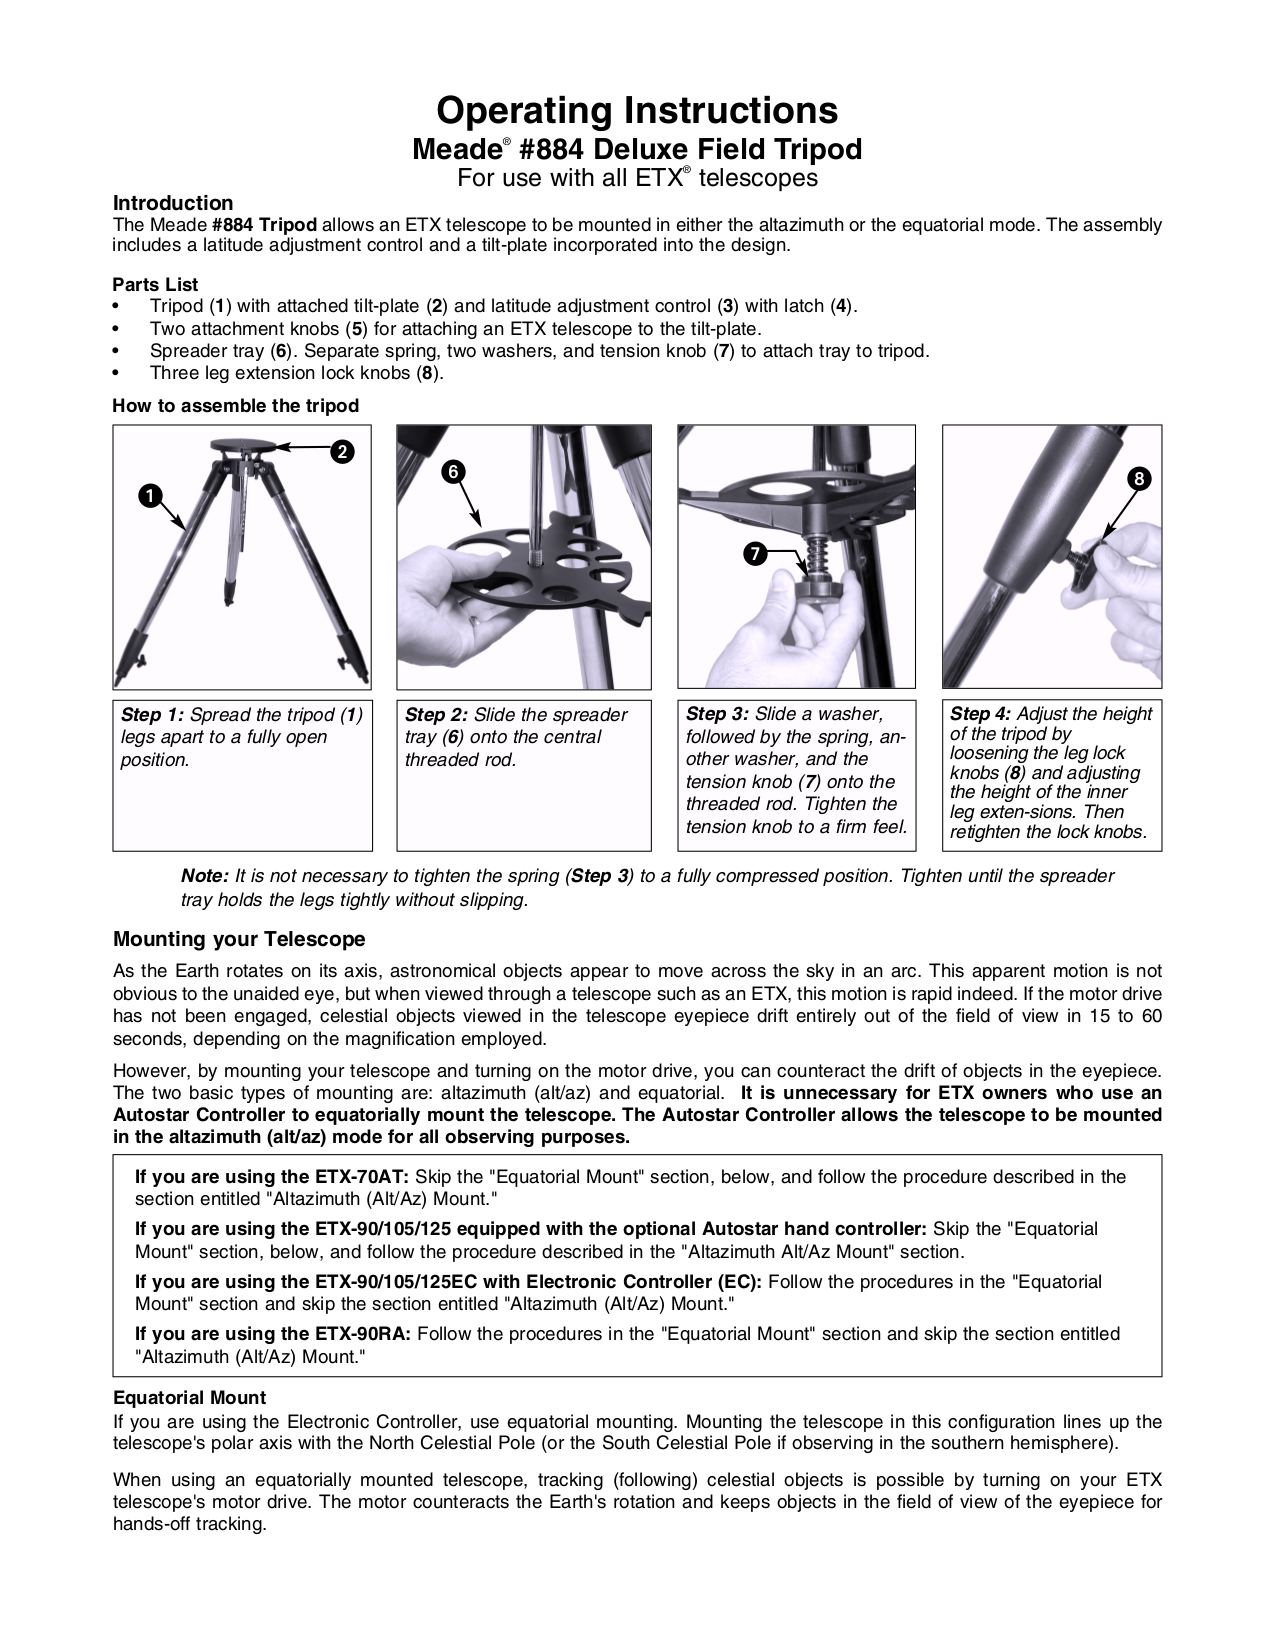 gskyer telescope instruction manual